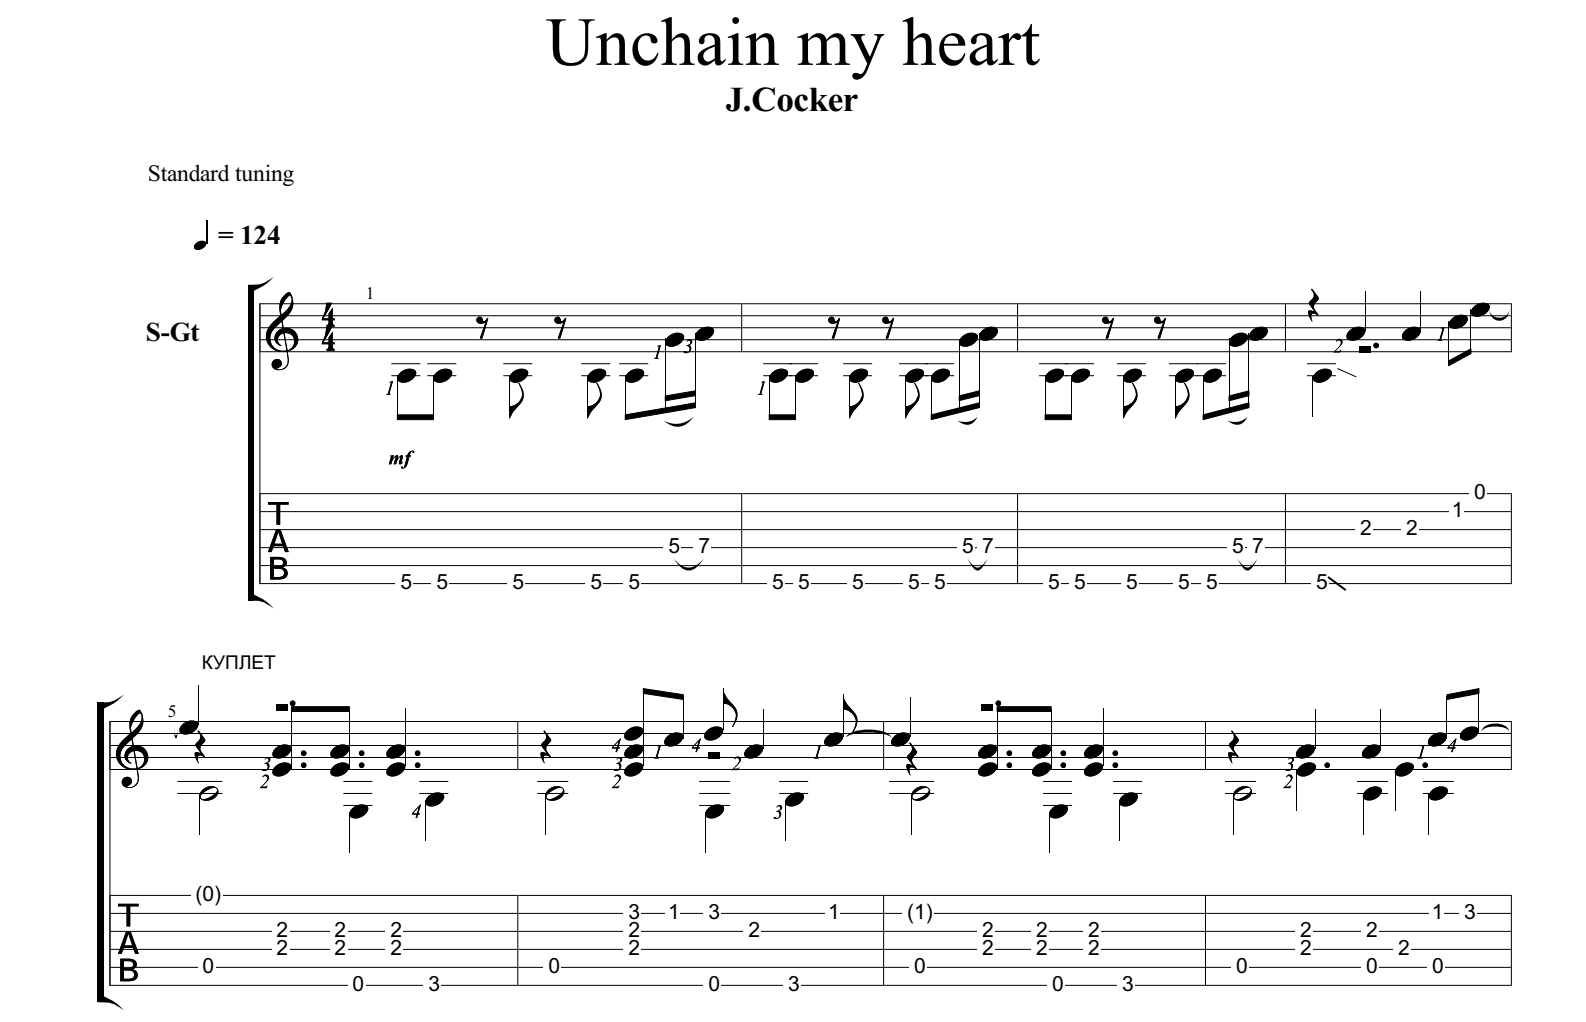 Unchain my heart gorgoroth guitar pro tab torrent kevin spacey filme deutsch torrent